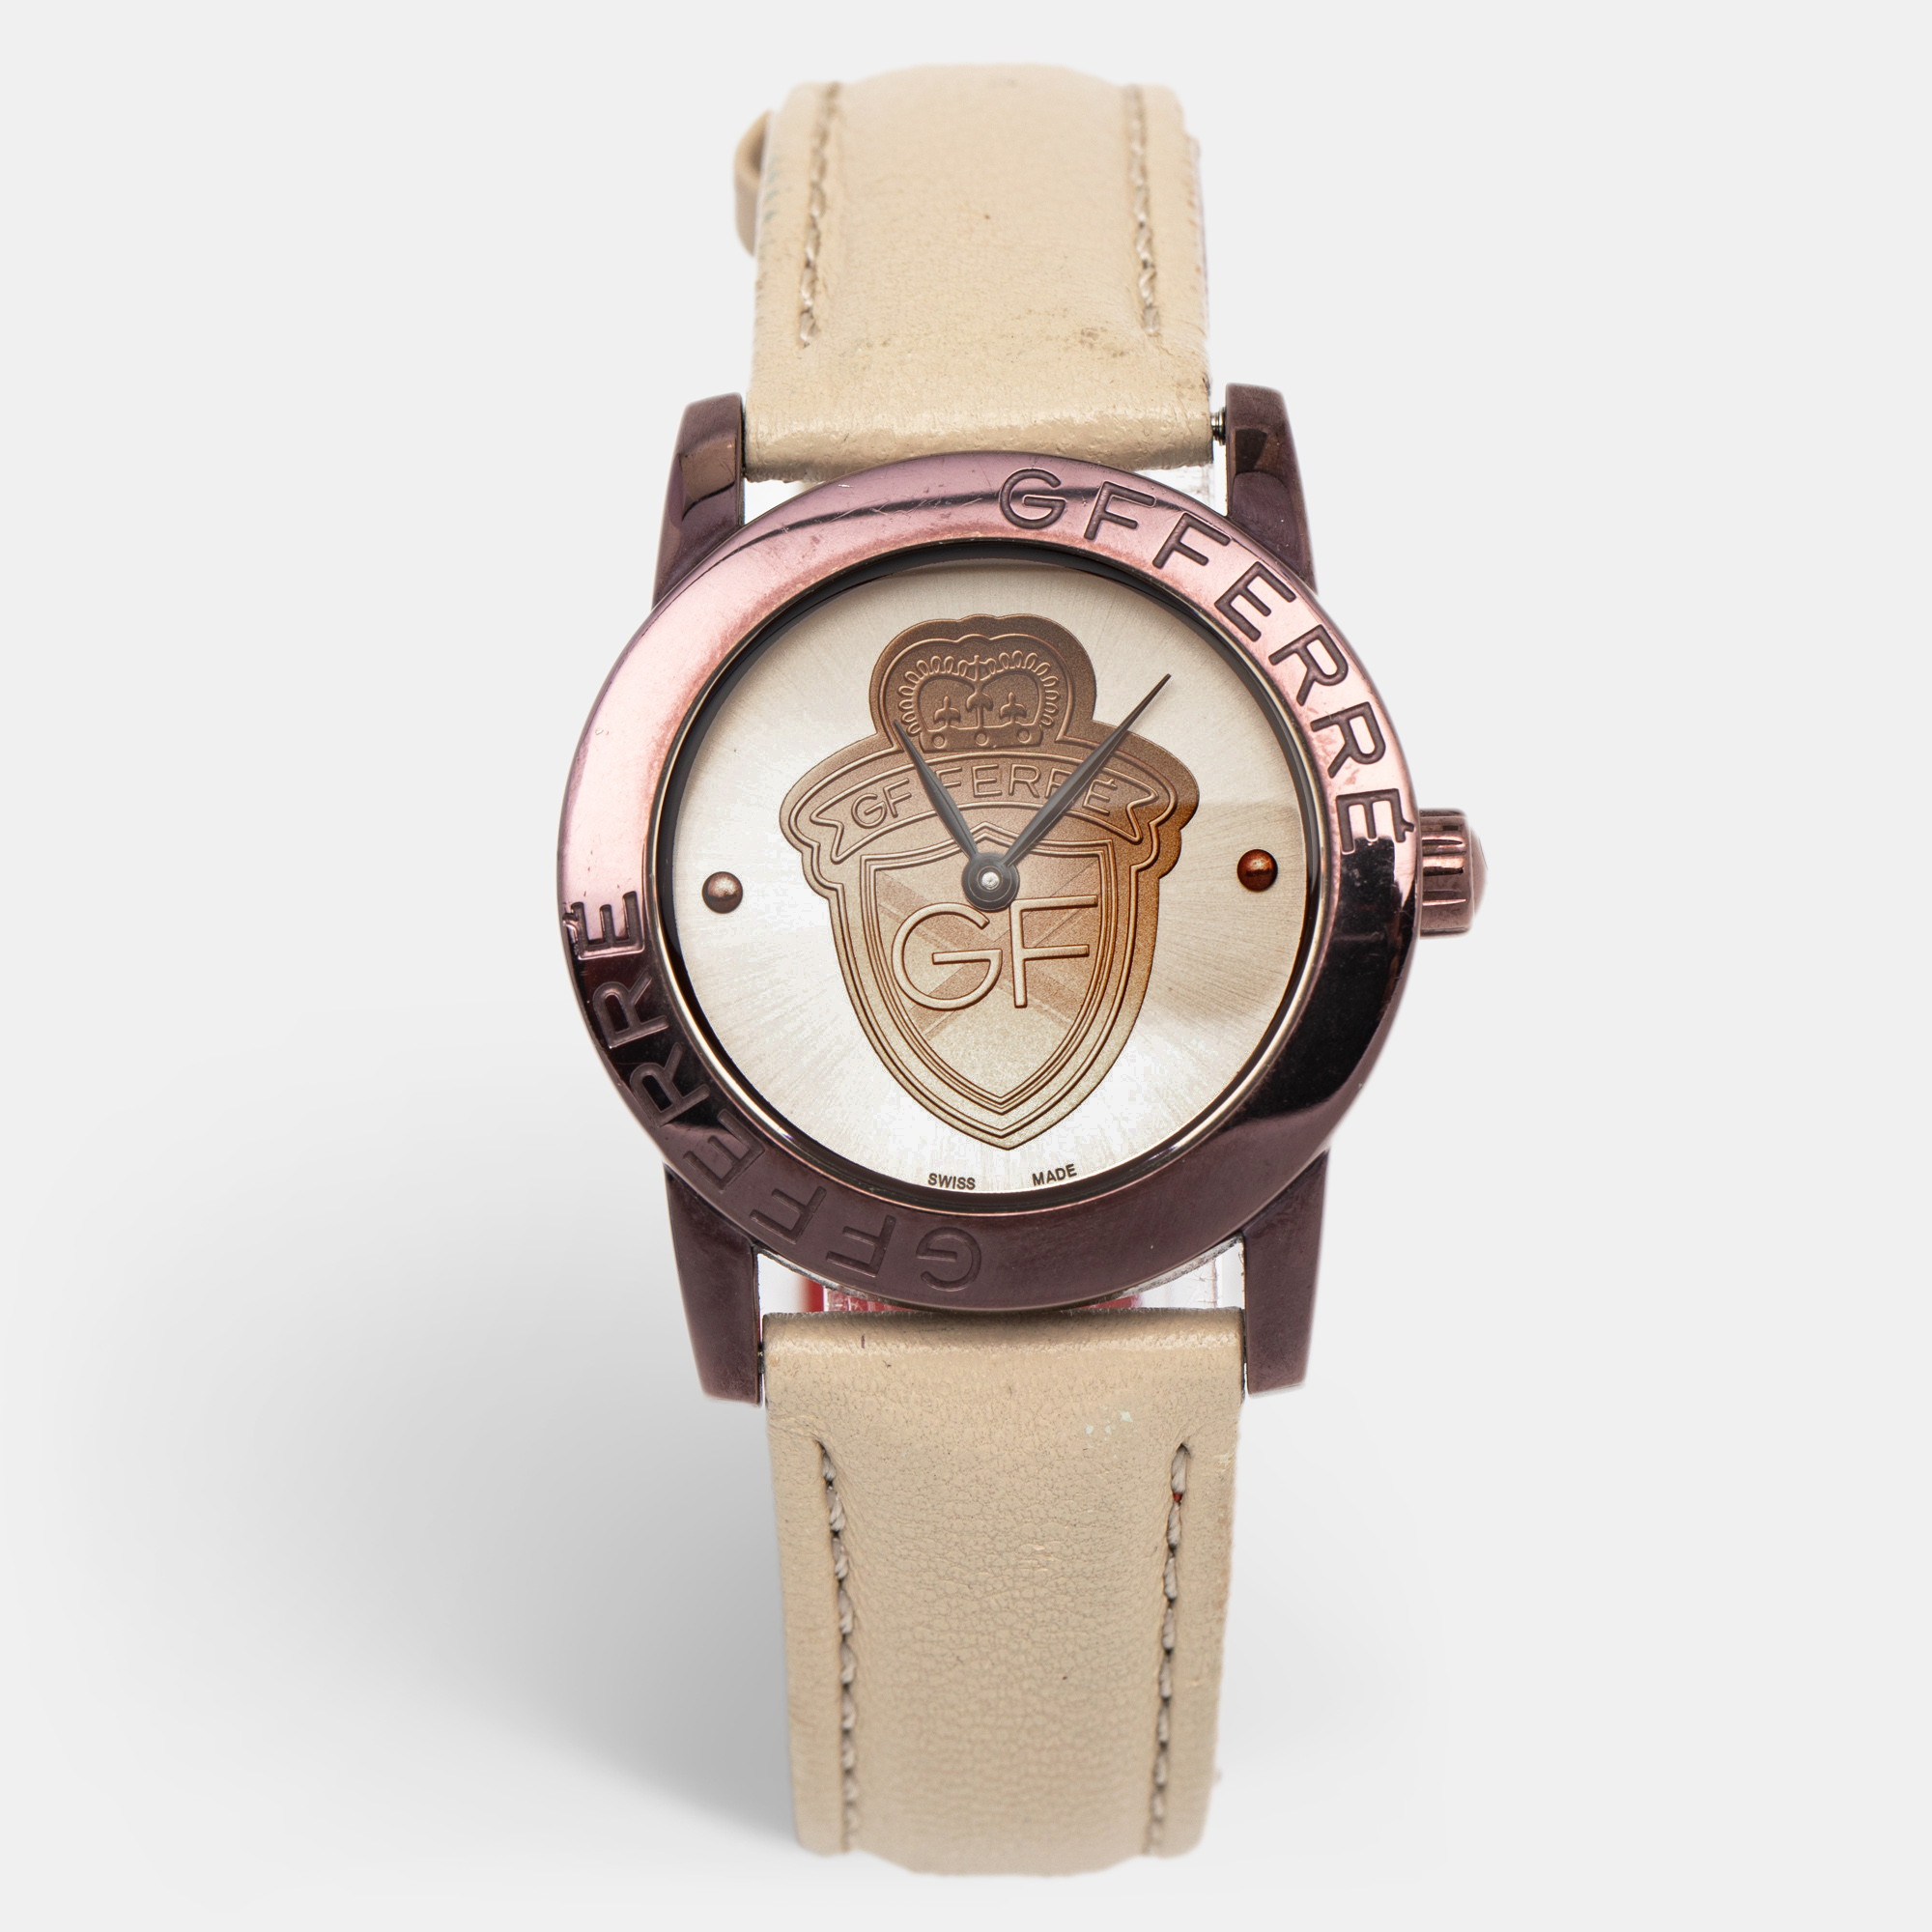 Gianfranco ferre gf ferre multicolor pvd coated stainless steel leather 9085l women's wristwatch 32 mm